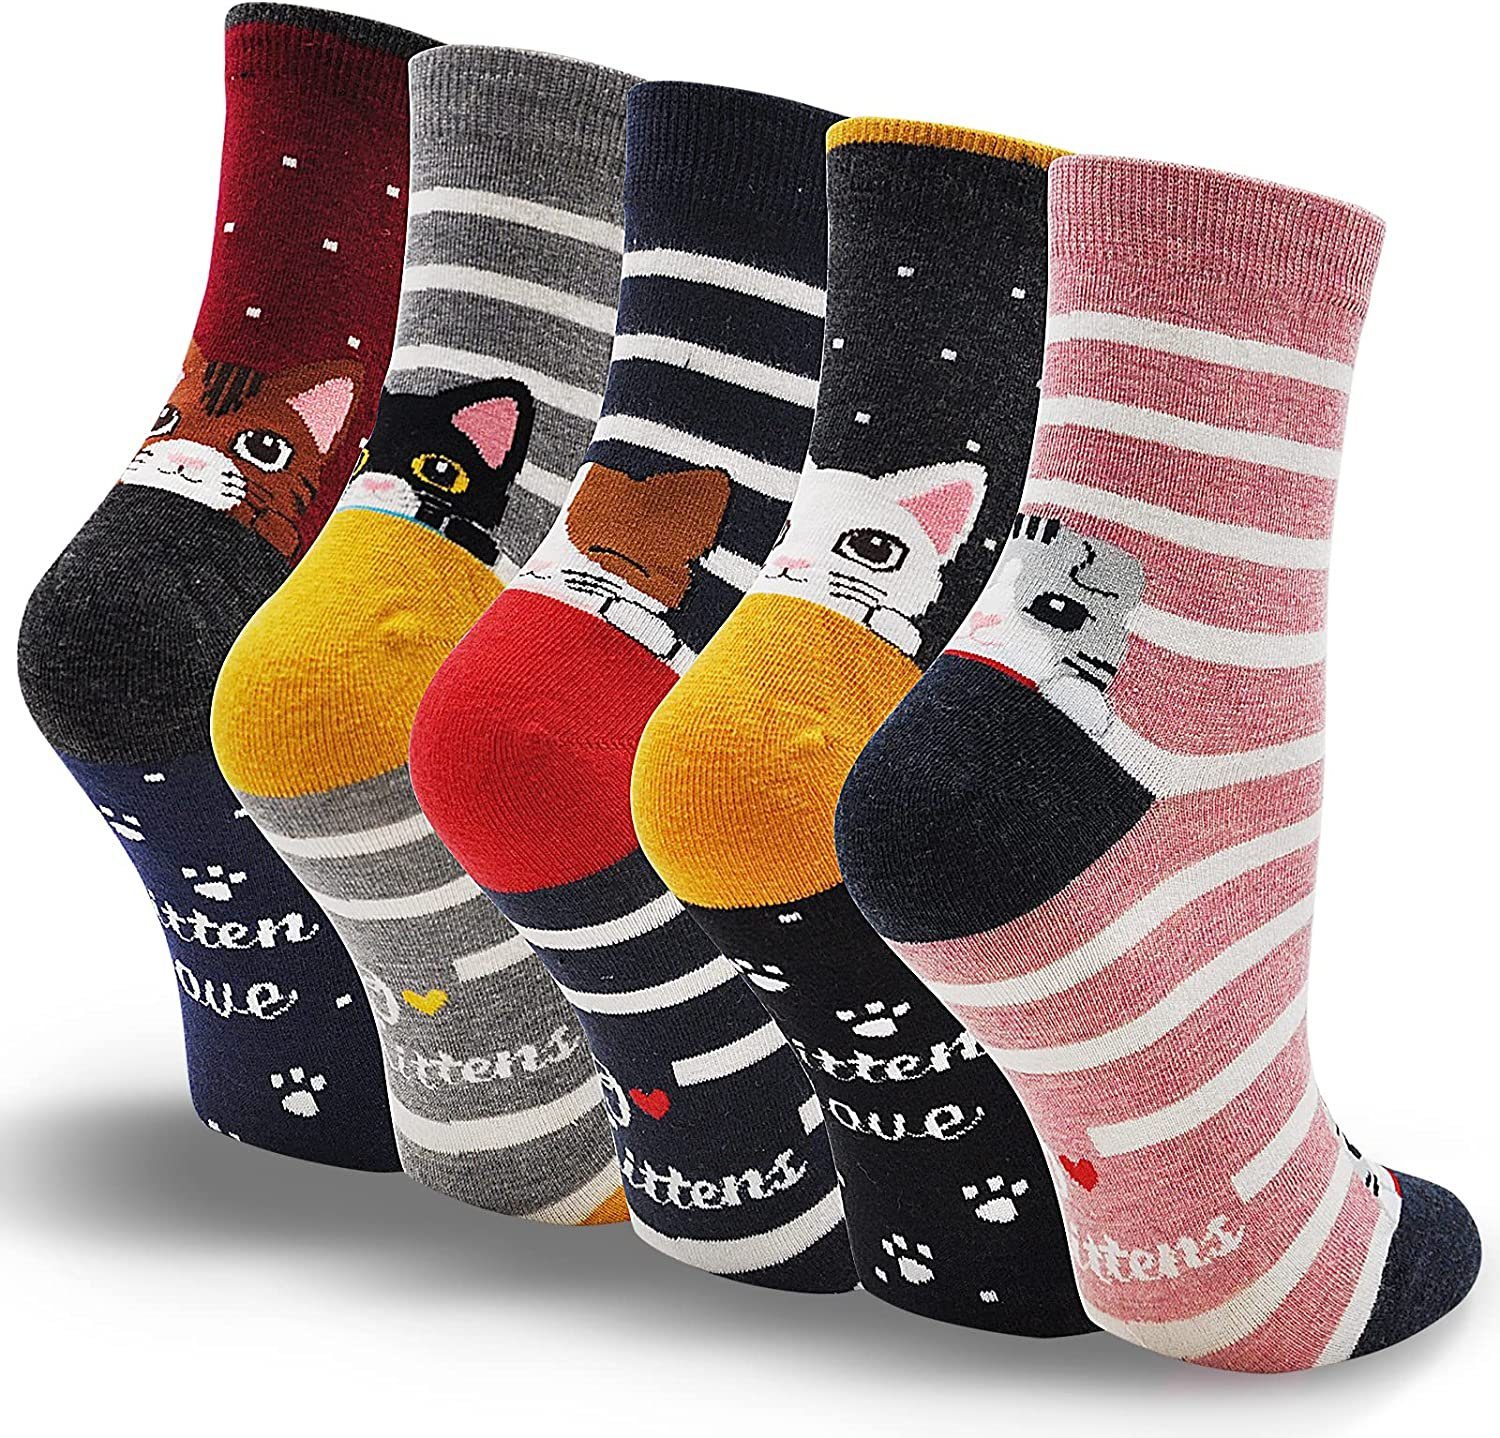 Alster Herz Freizeitsocken 5x lustige Шкарпетки, Katzenmotiv, bunt, trendy, süßes Design, A0344 (5-Paar) atmungsaktiv